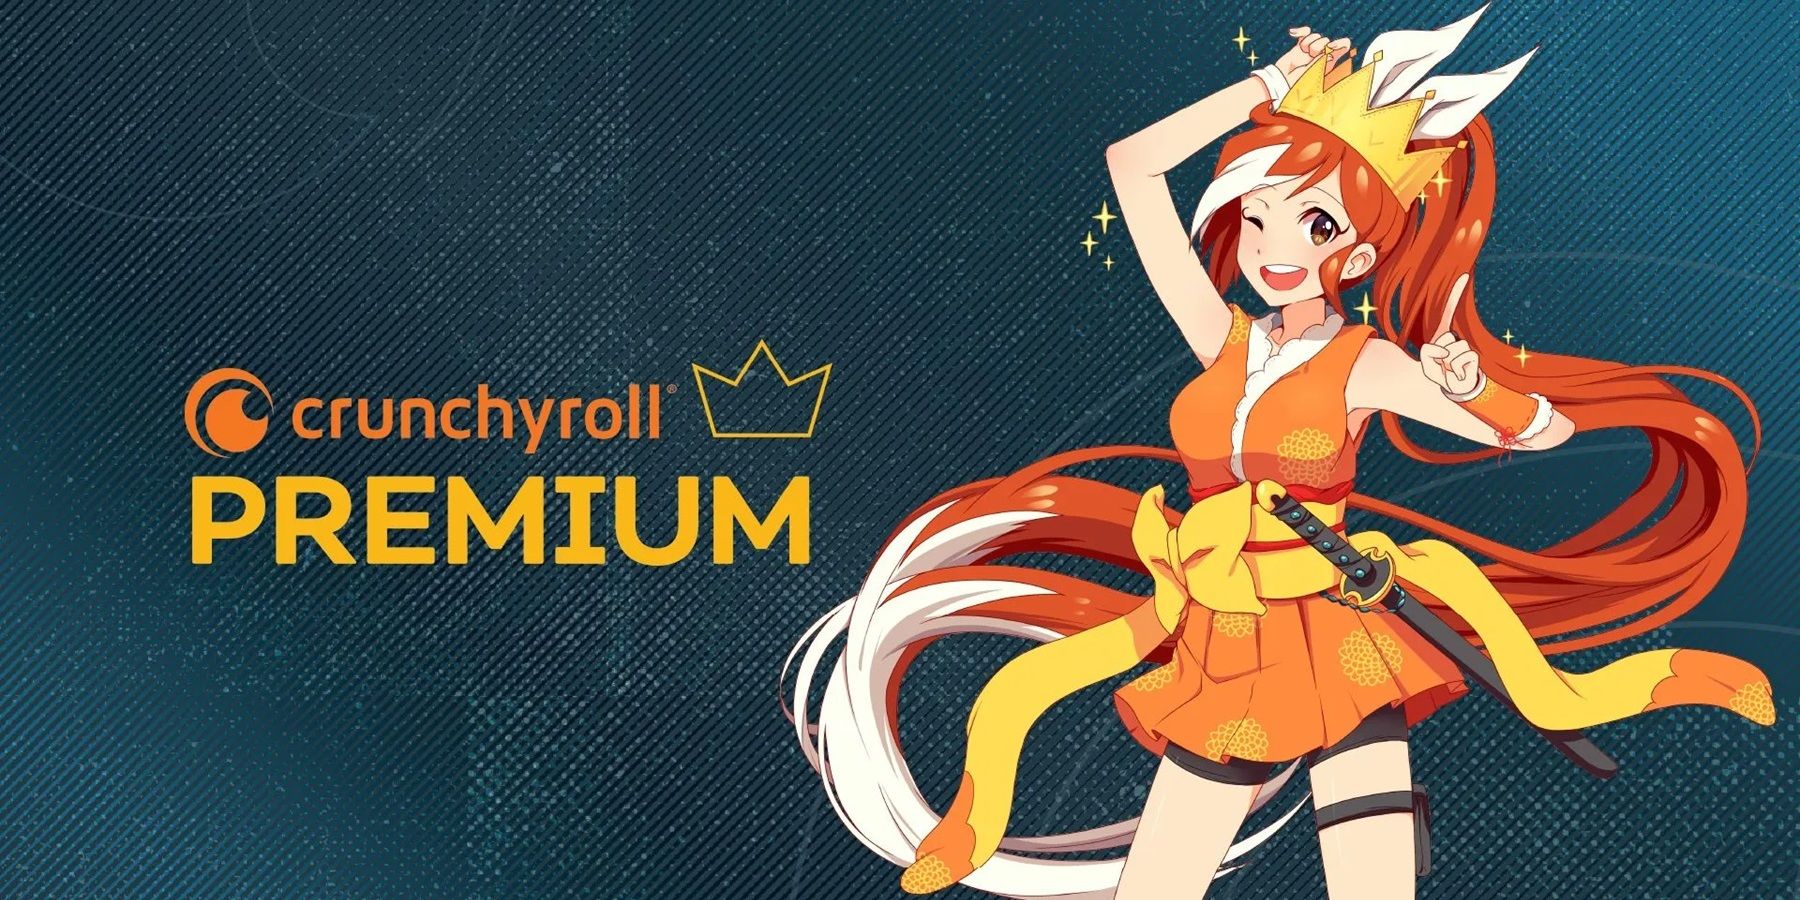 Crunchyroll Game Vault: River City Girls, inbento & More Free Games for  Members - Crunchyroll News